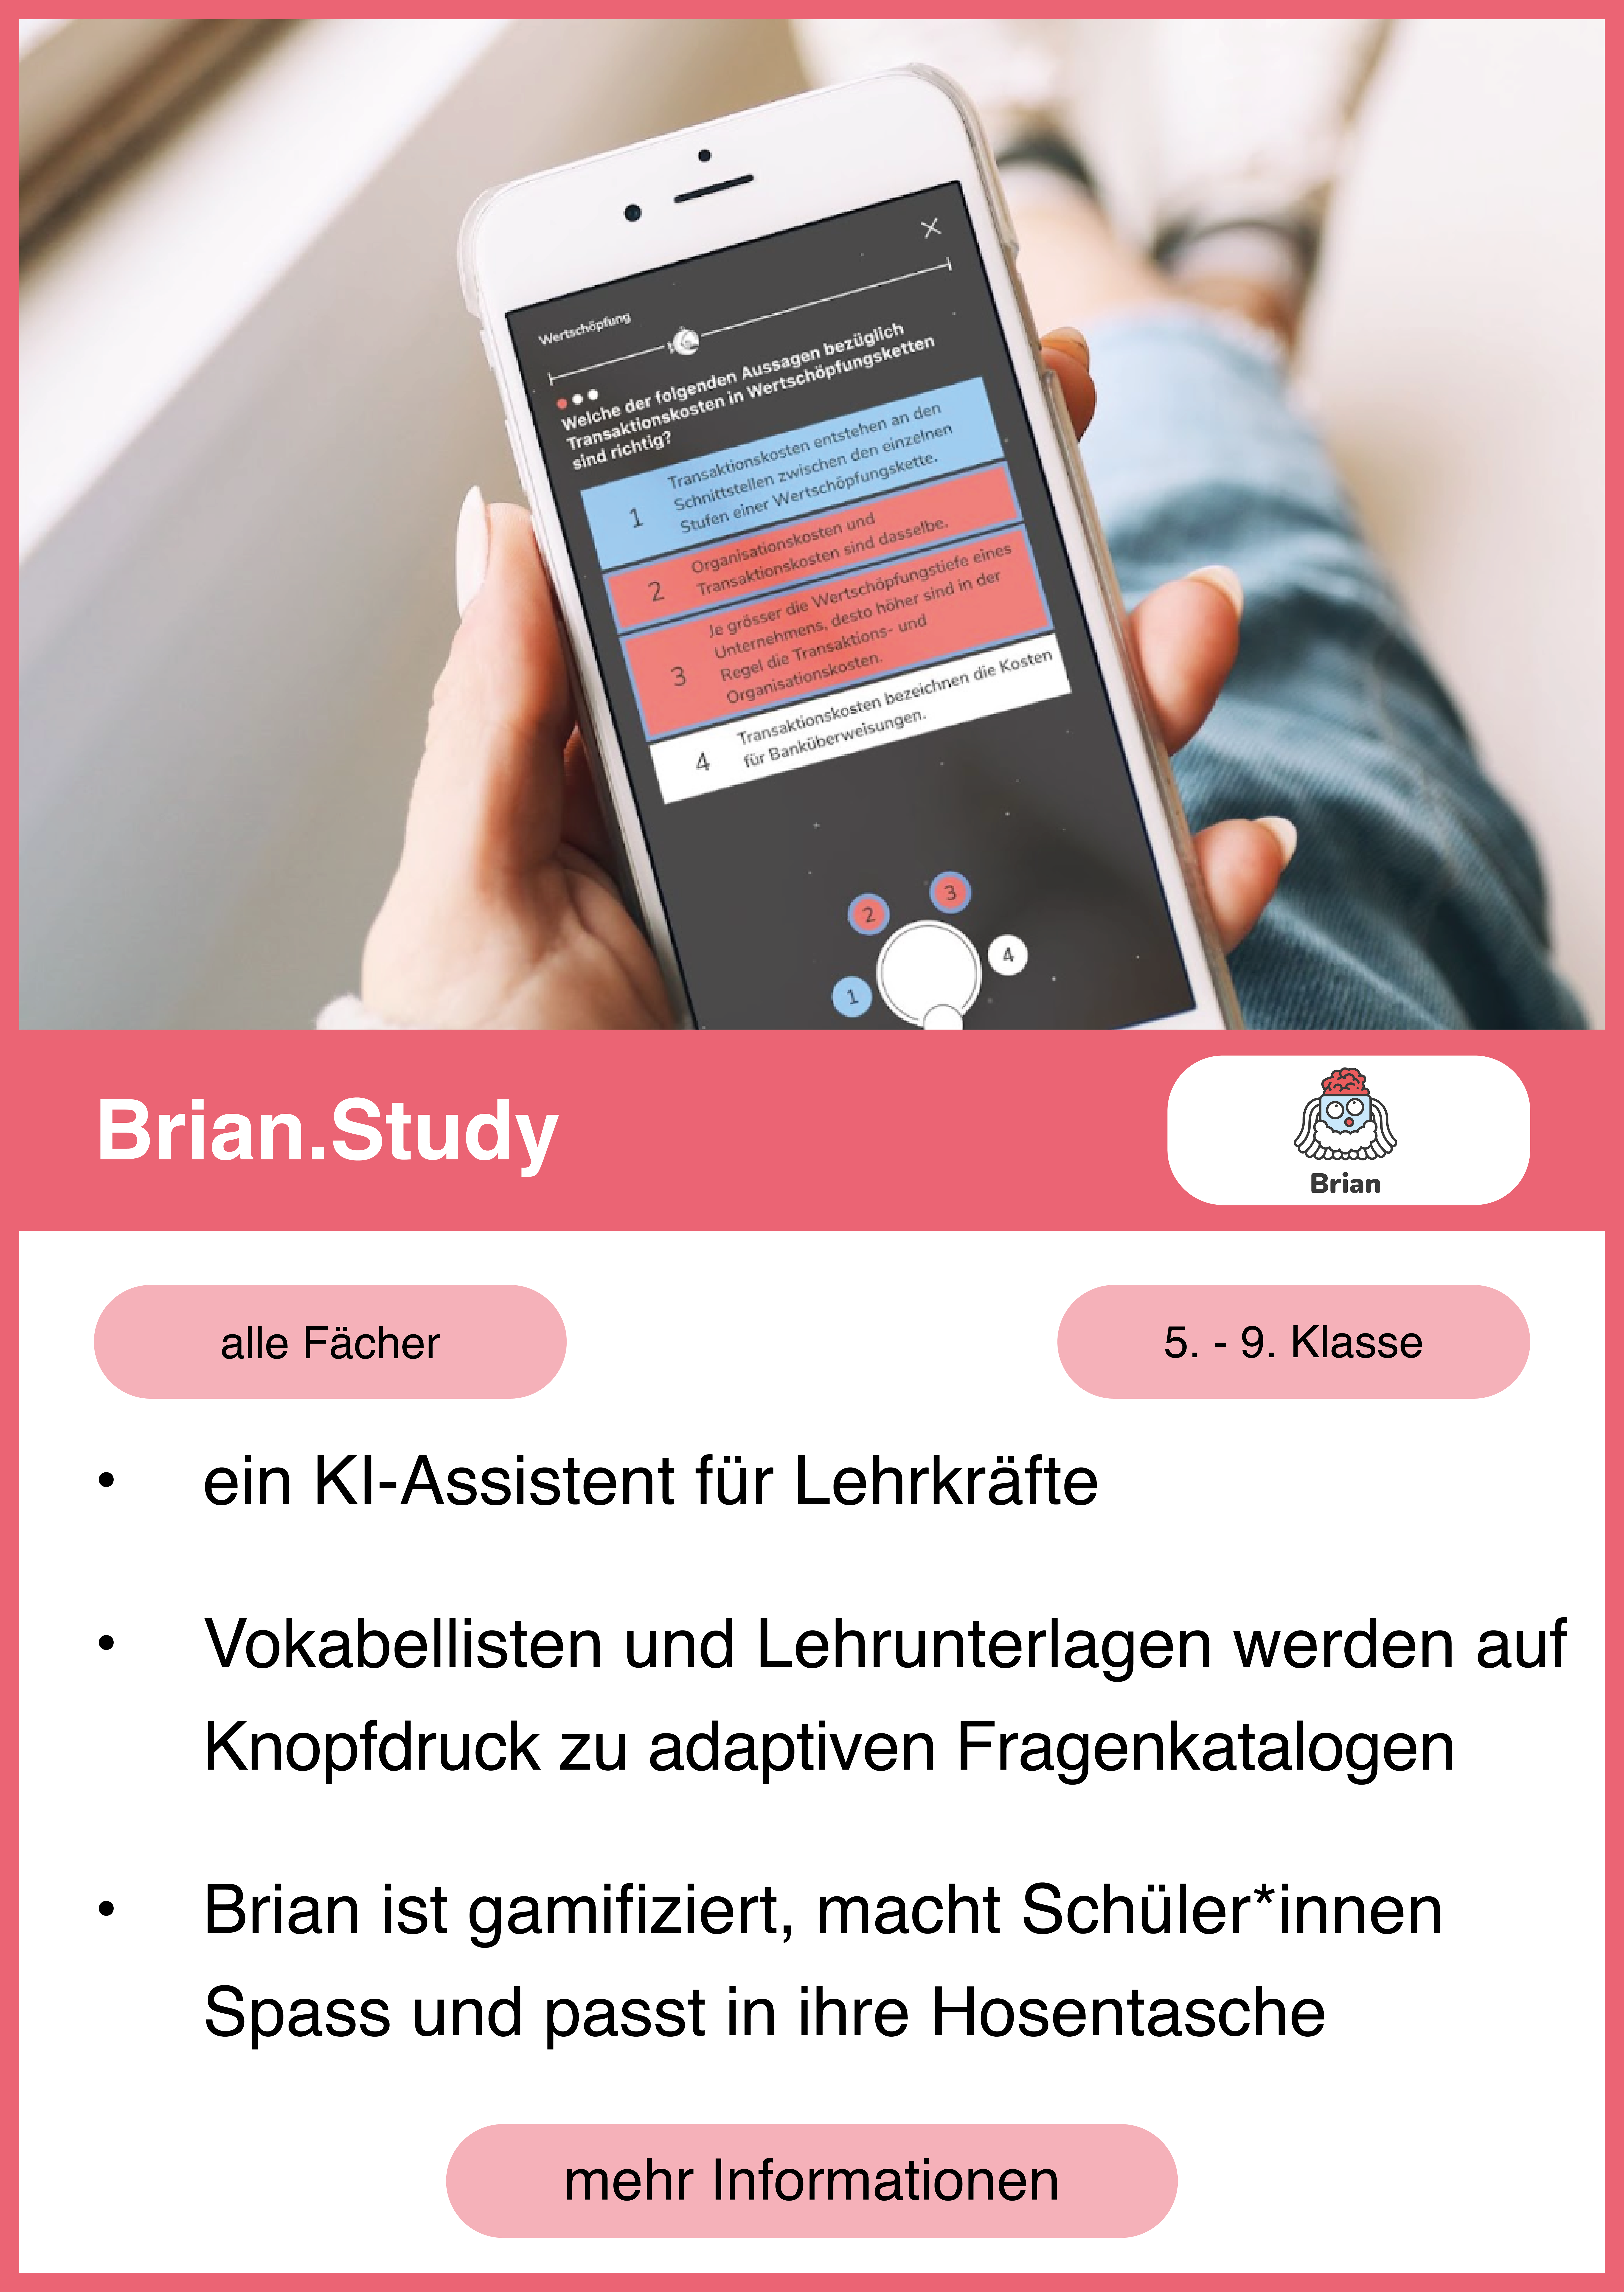 Brian.Study